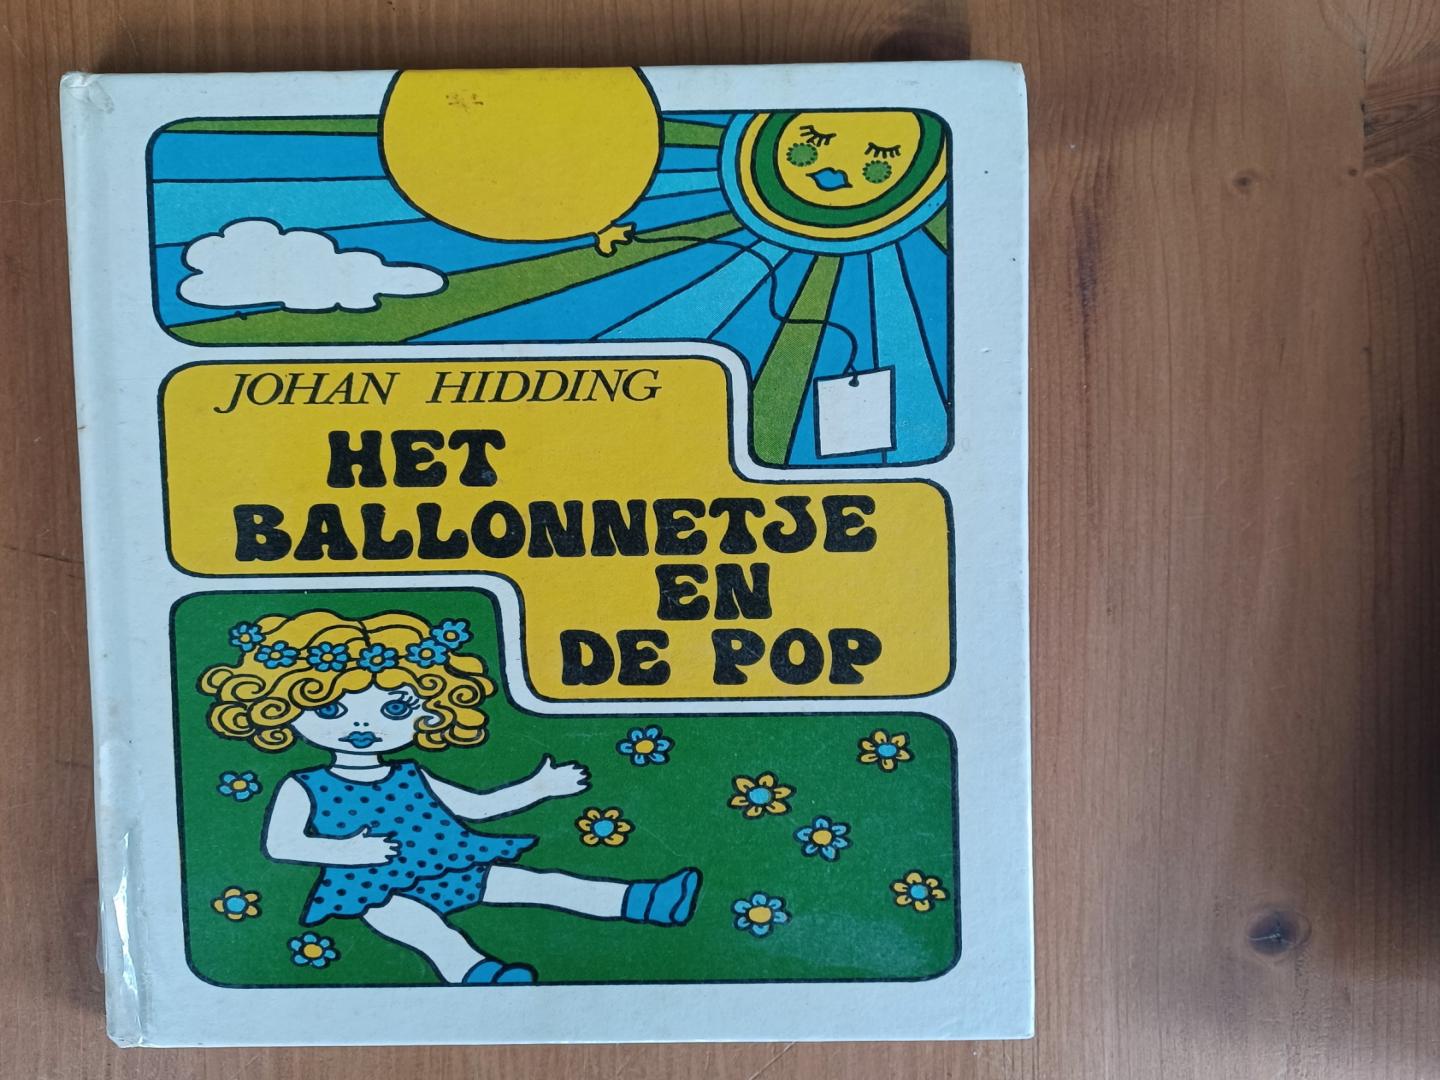 Hidding, Johan - Het ballonnetje en de pop